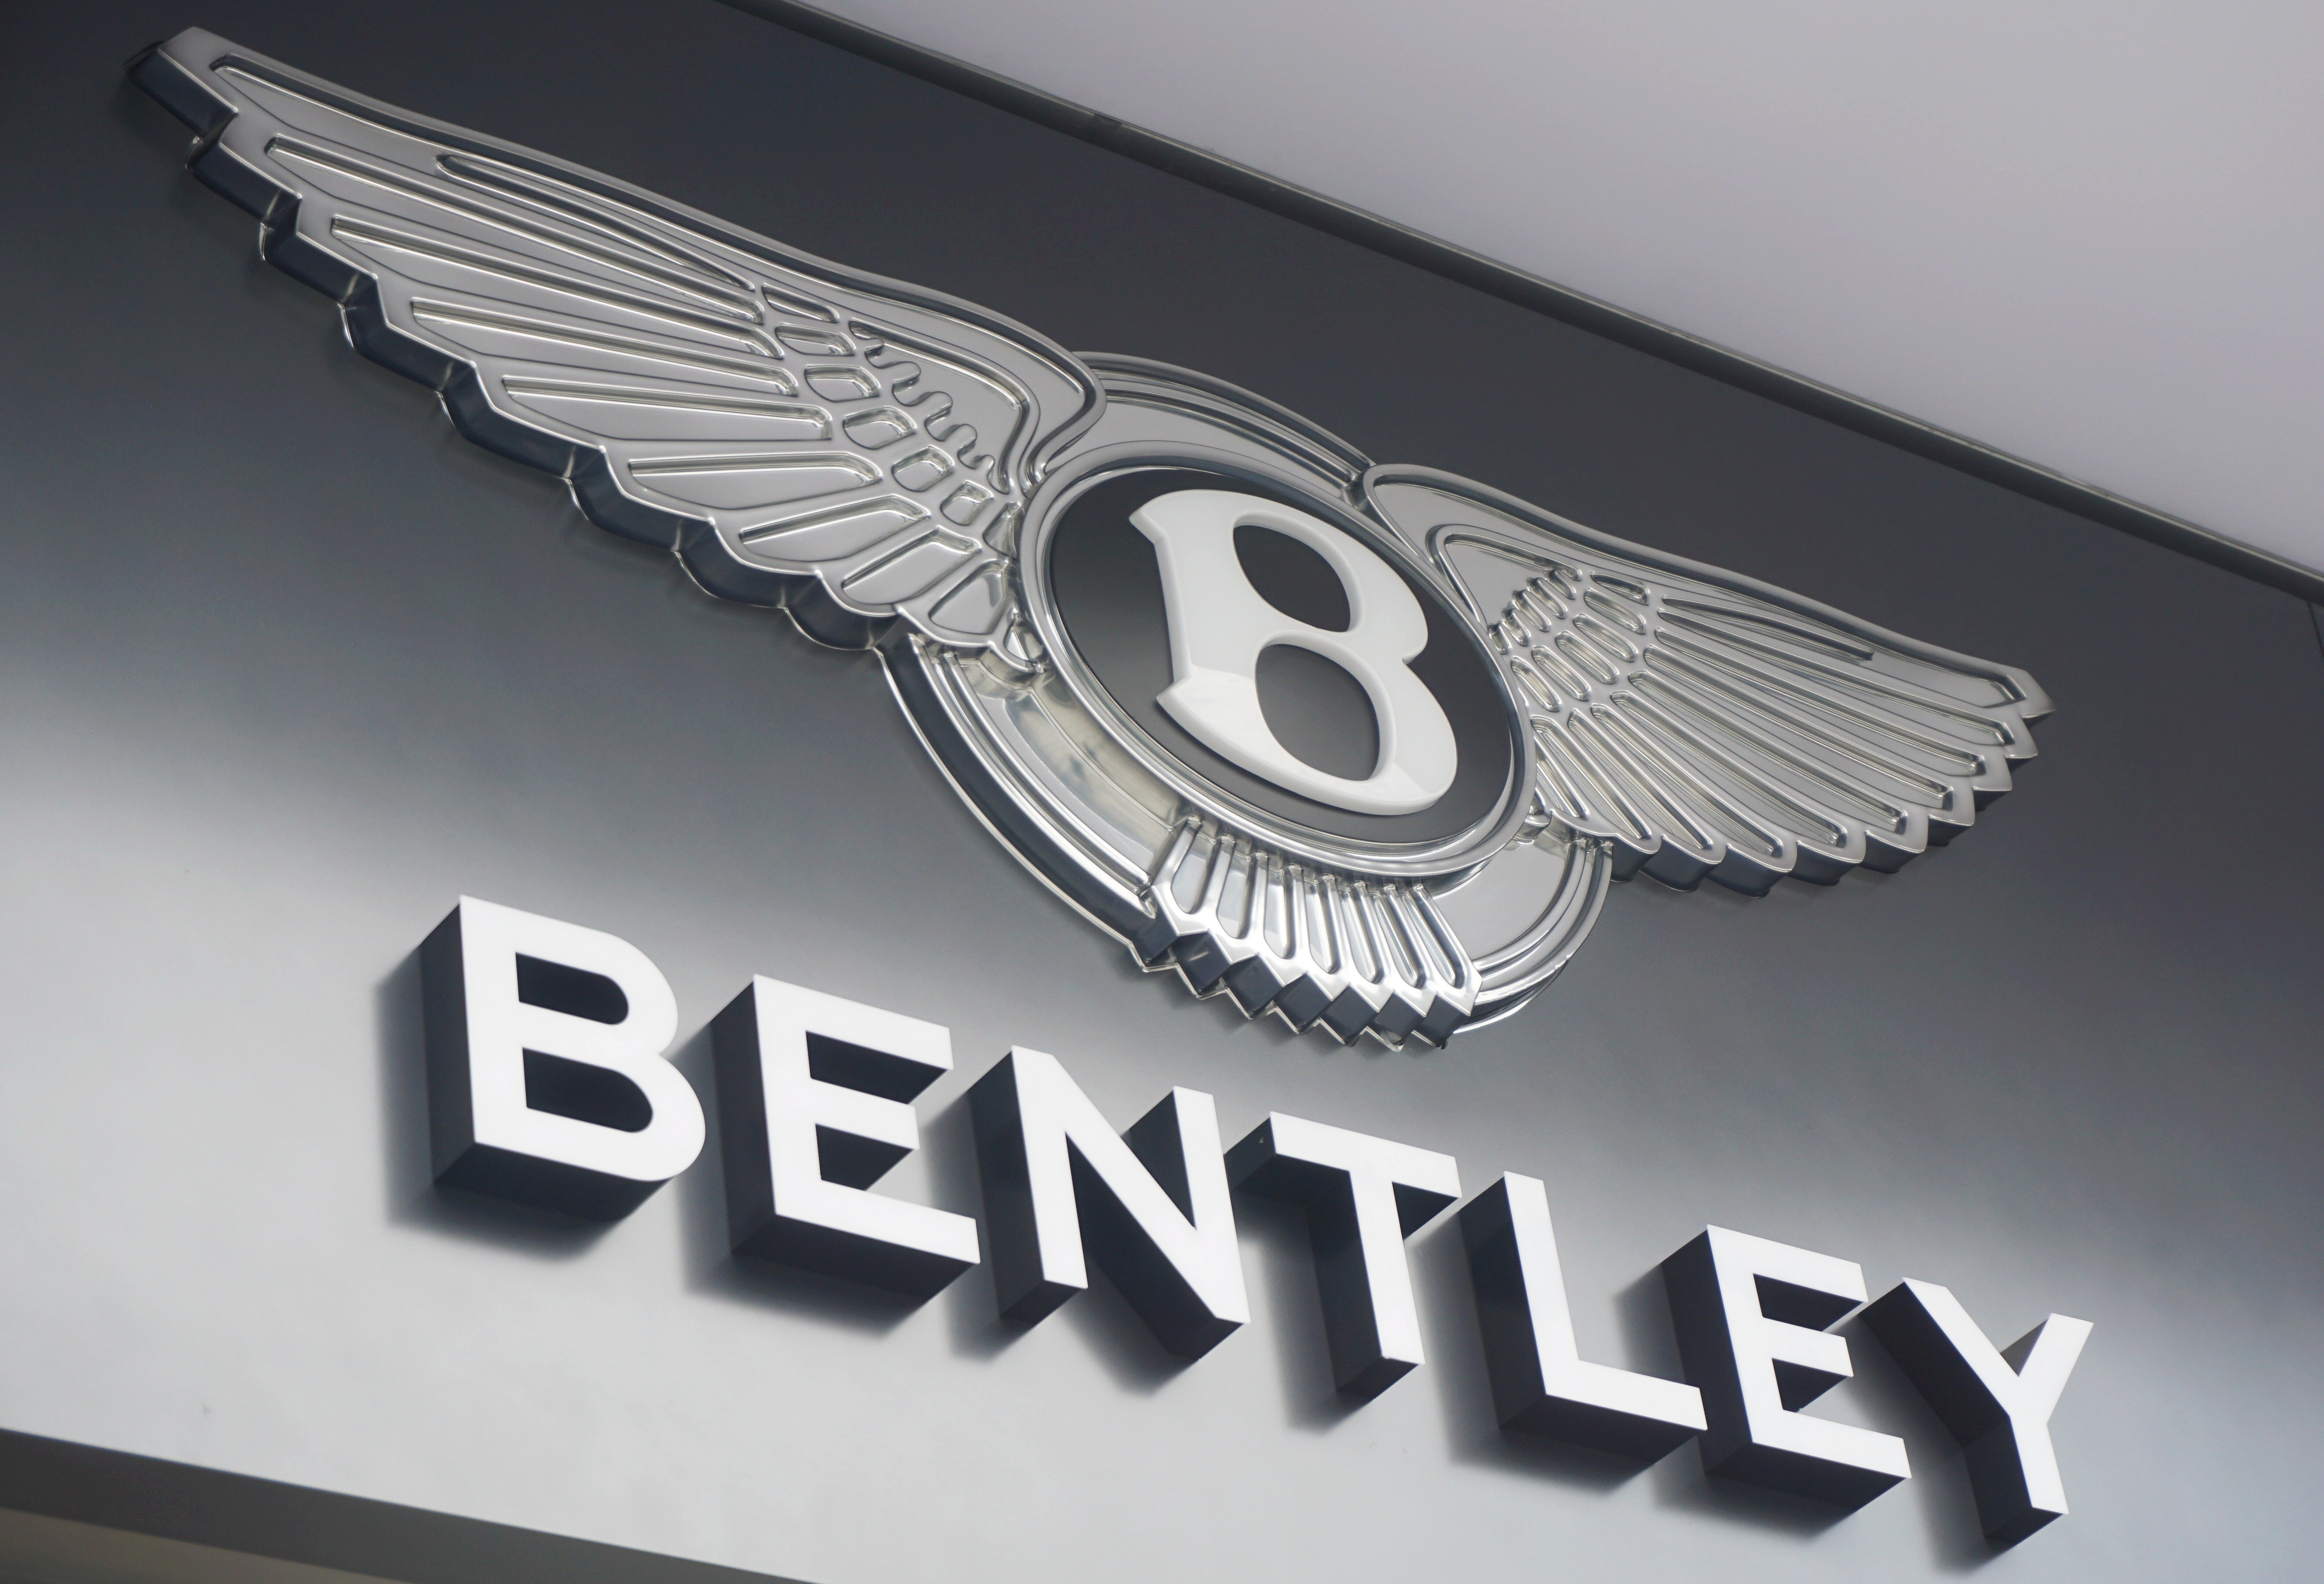 Bentley originally manufactured aircraft engines